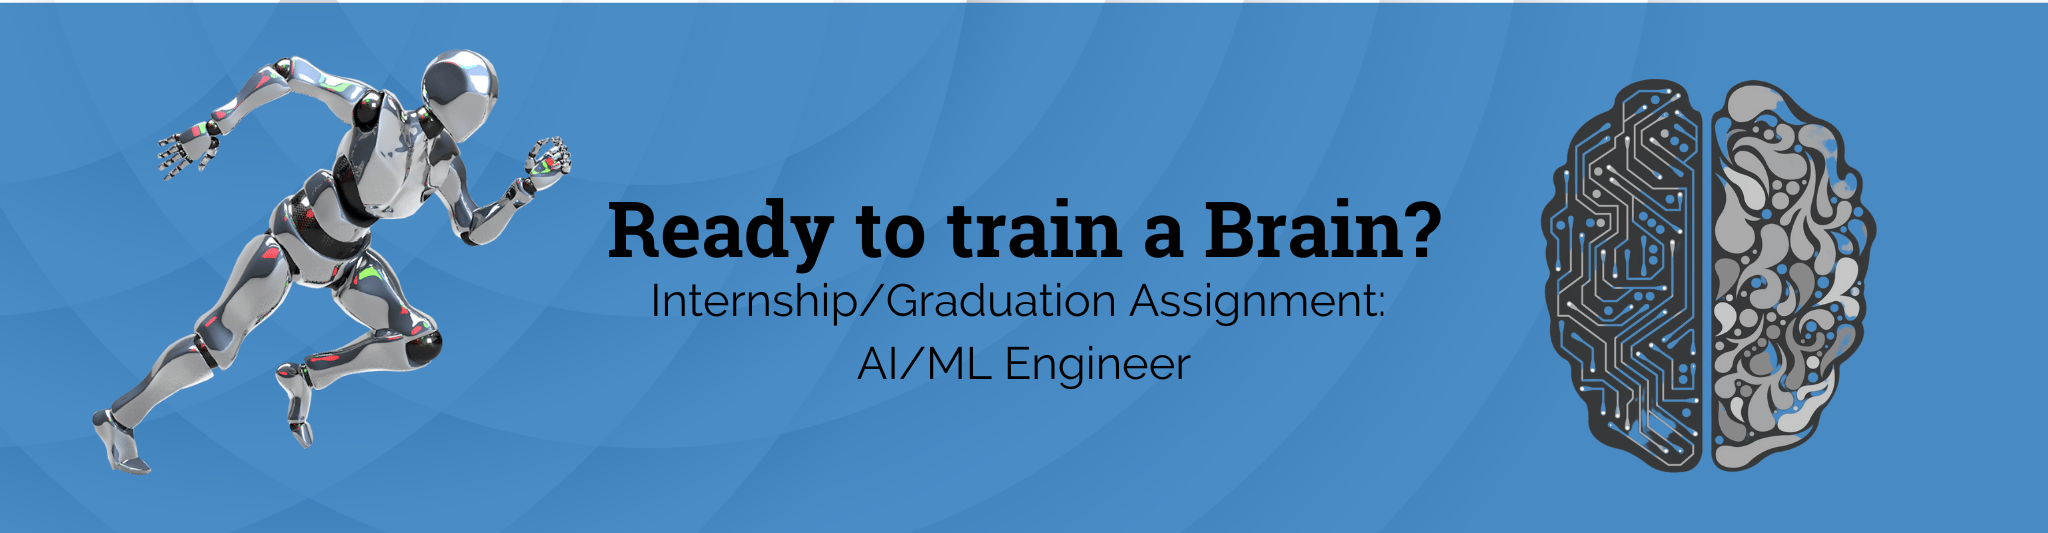 Ready to Train a Brain? Internship Graduation Assignment